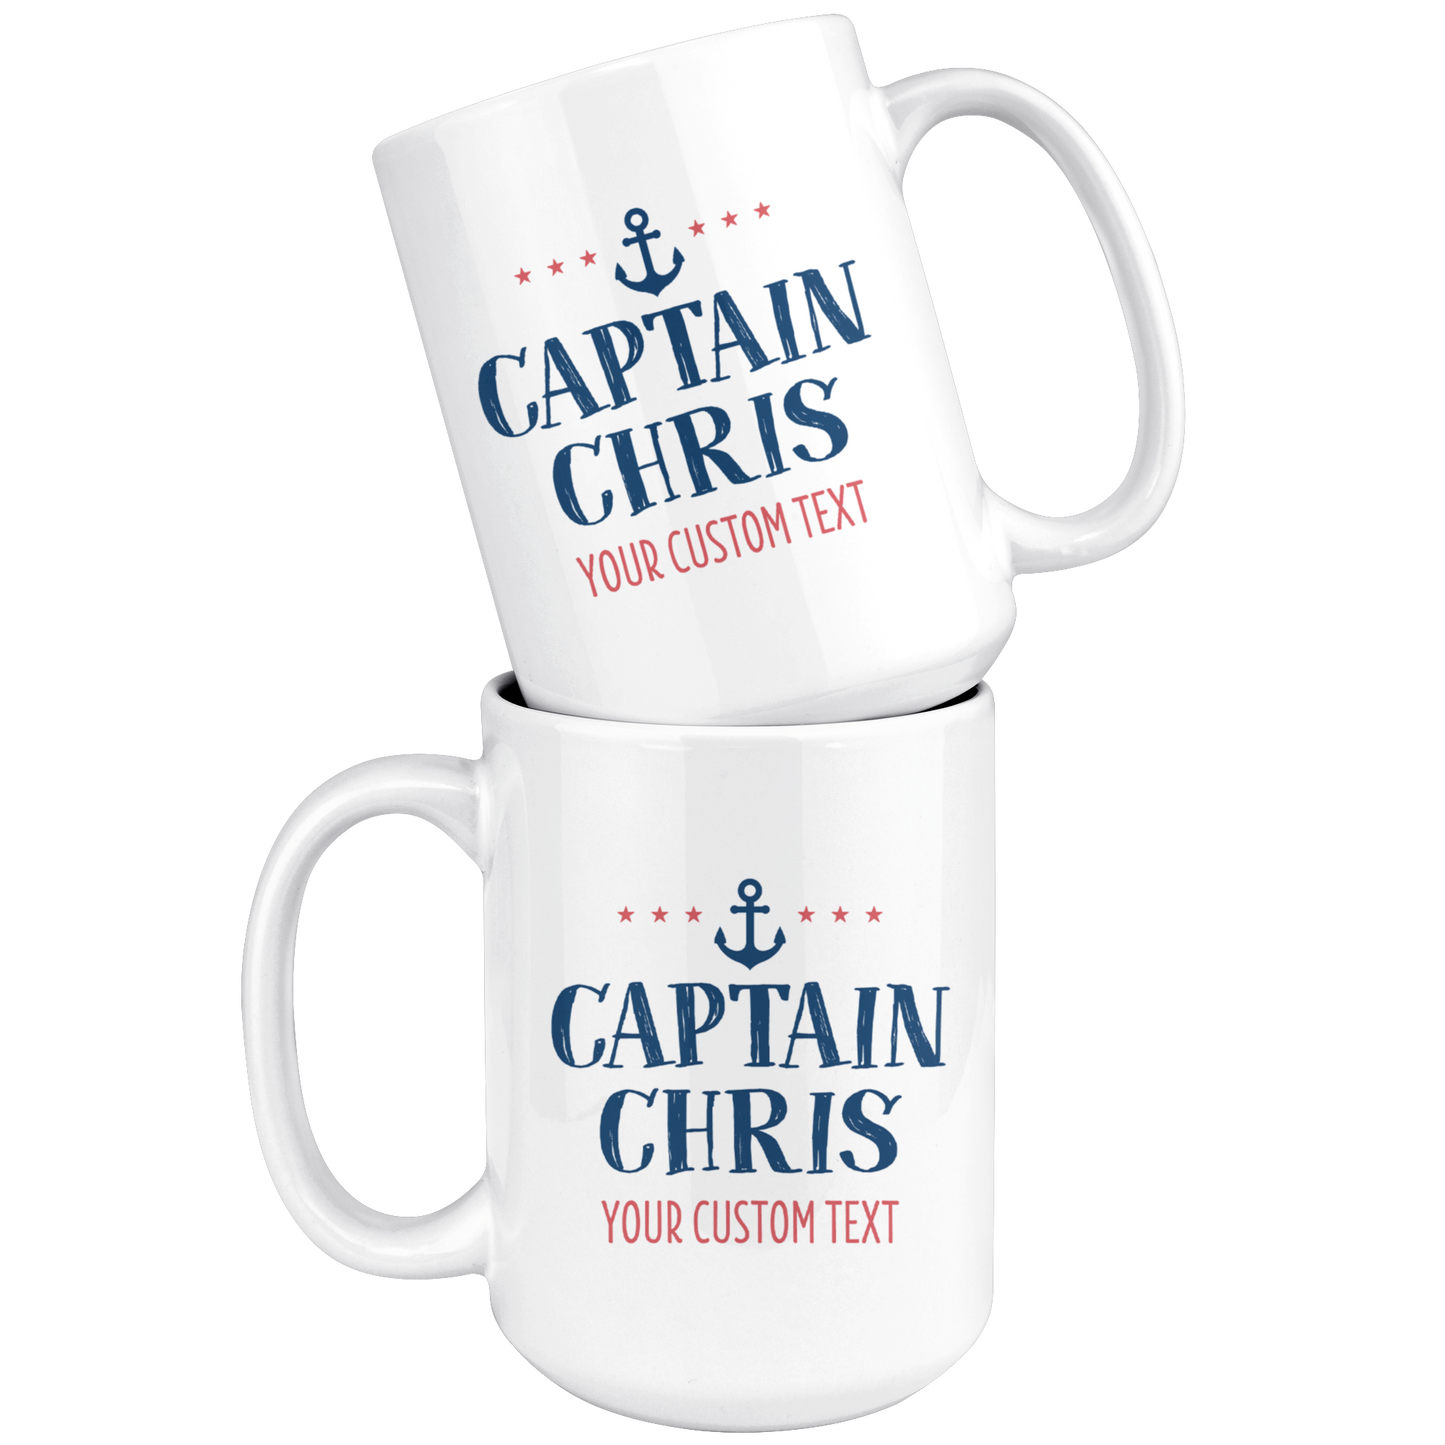 Captain or First Mate Coffee Mug - Smith Mountain Lake Gift